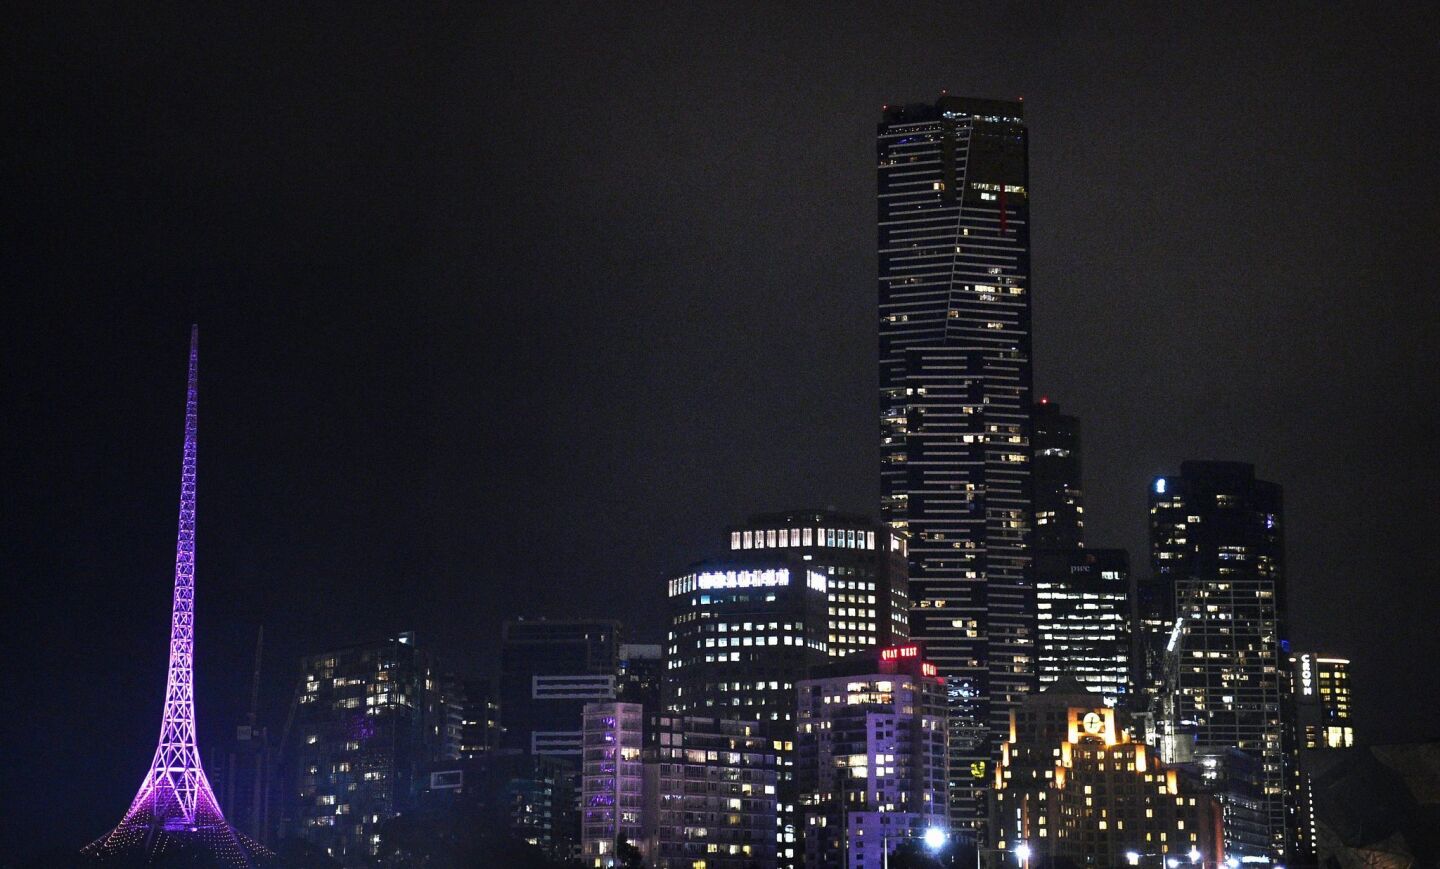 The Melbourne Arts Centre spire is lit in purple to honor Prince in Melbourne, Australia.